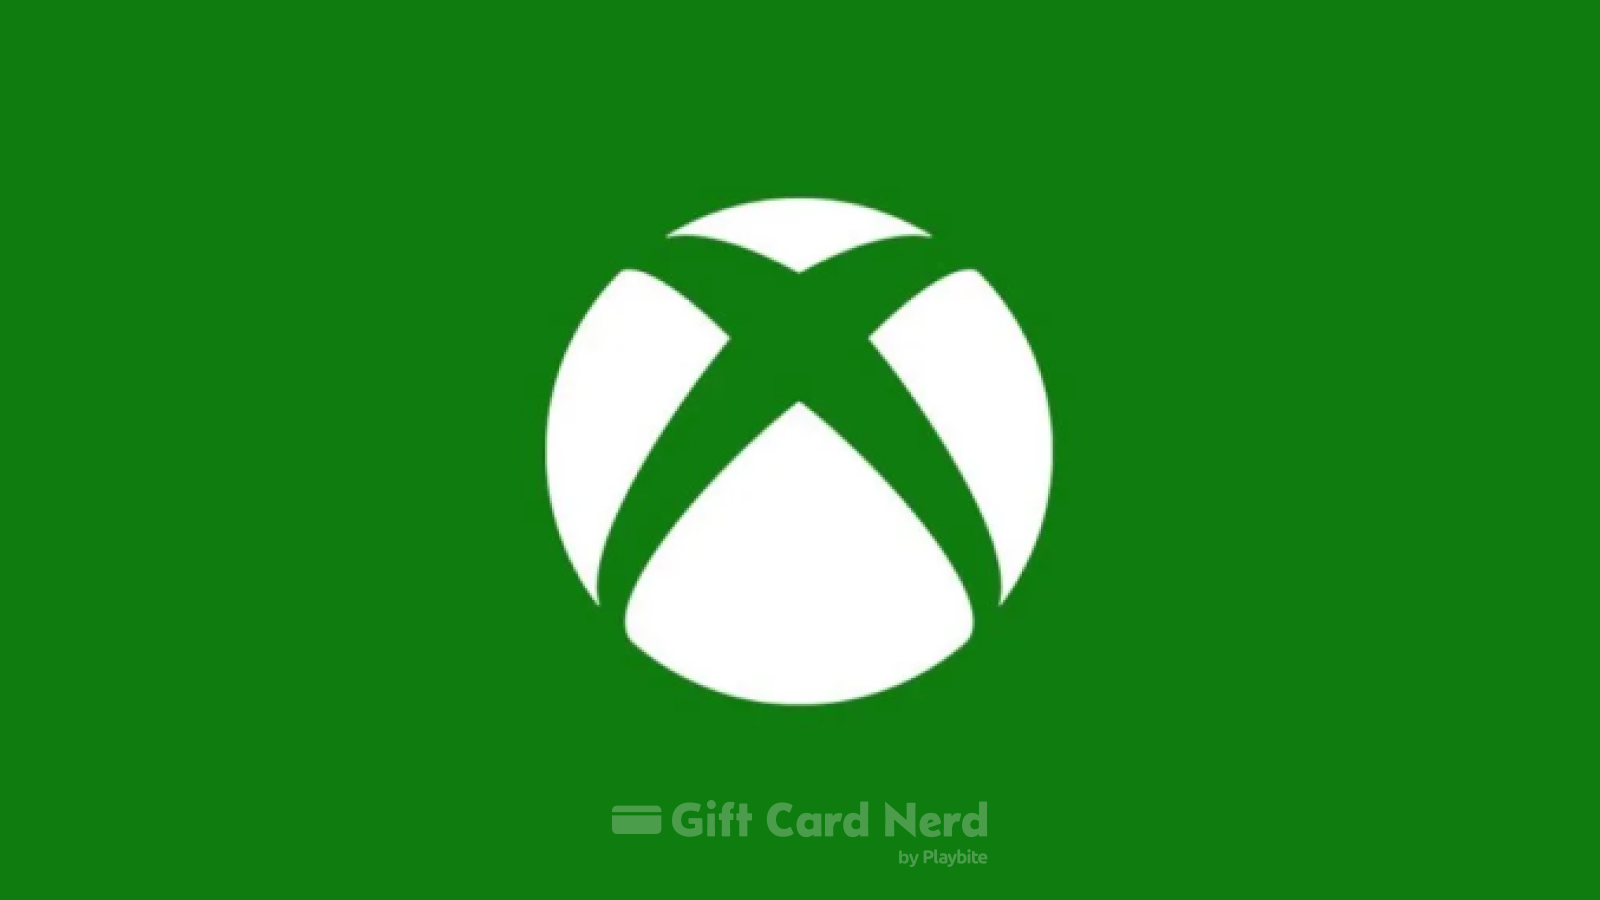 Can You Use an Xbox Gift Card on Grubhub?